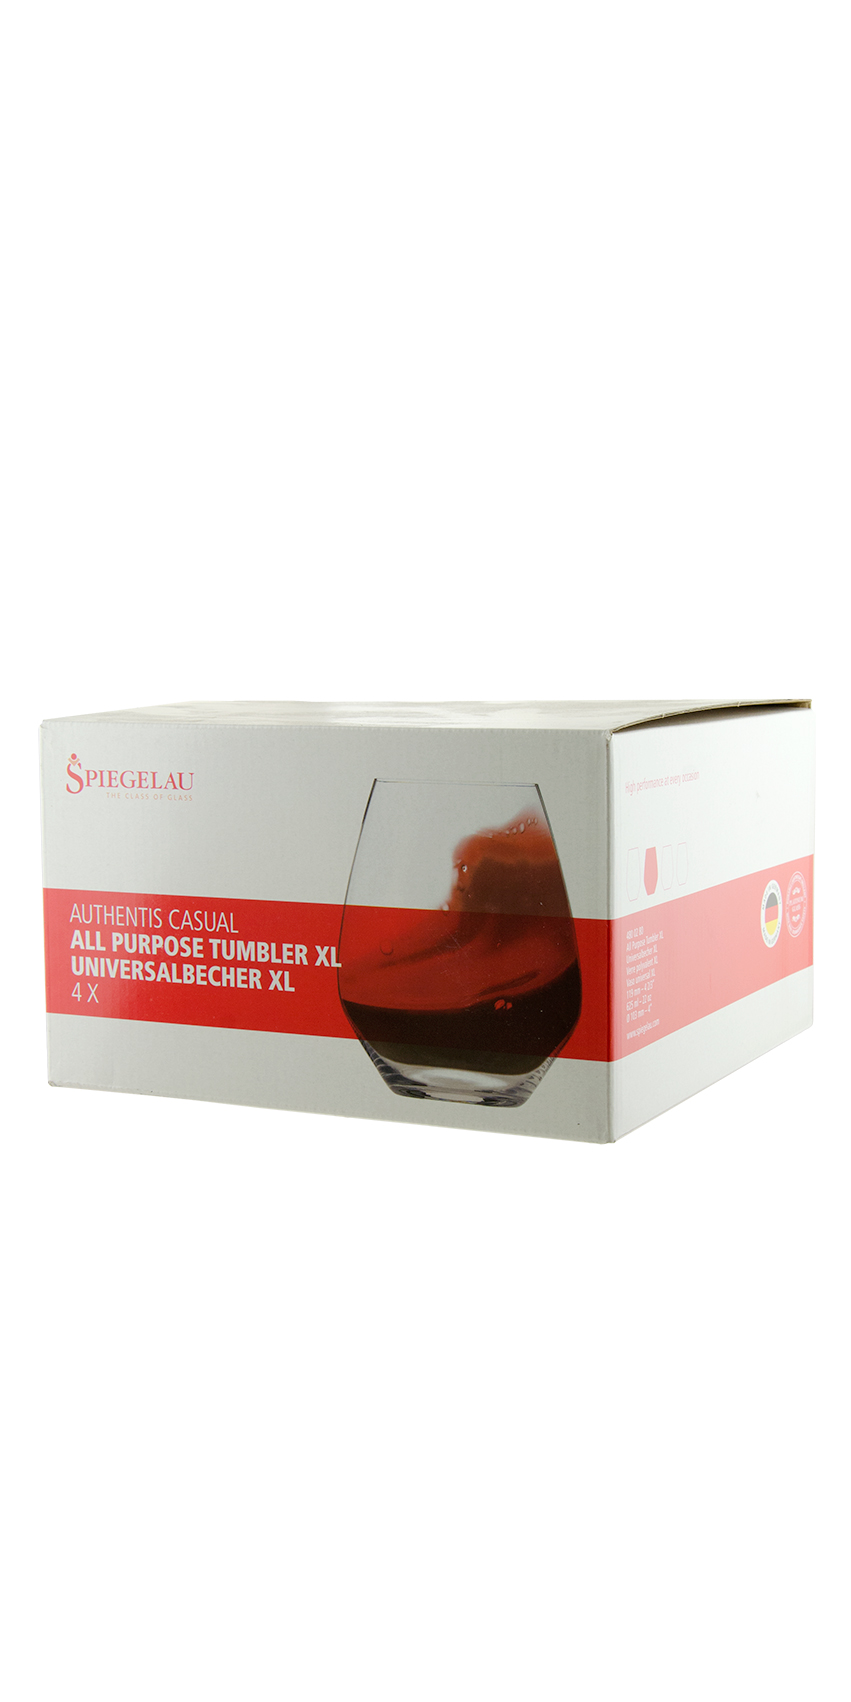 Spiegelau Authentis Tumbler Glass (Set of 4)(4800280)